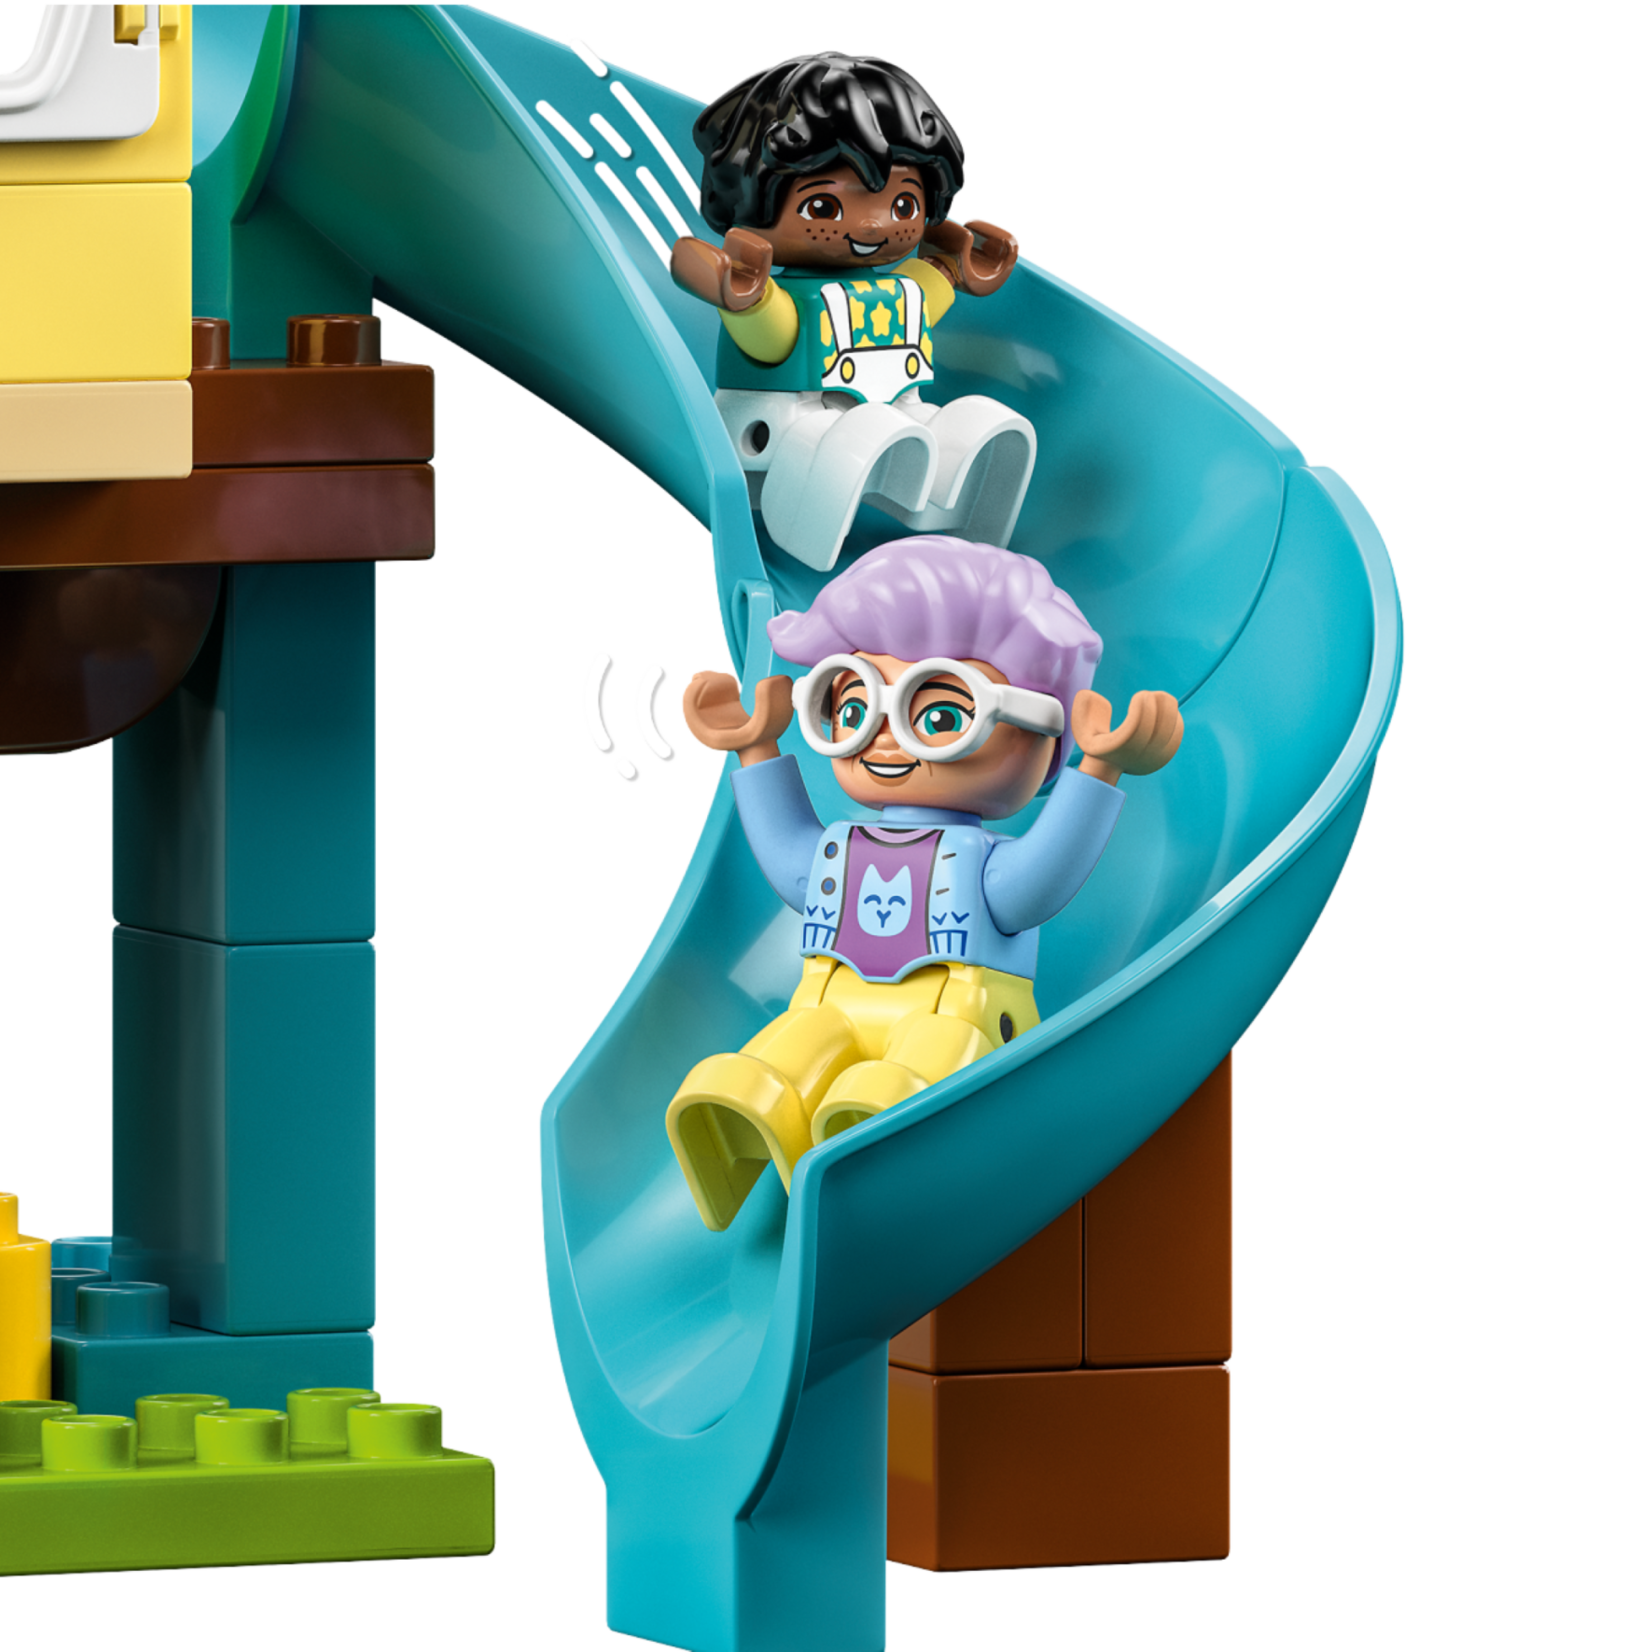 Lego LEGO 10993 Duplo - La cabane dans l’arbre 3-en-1